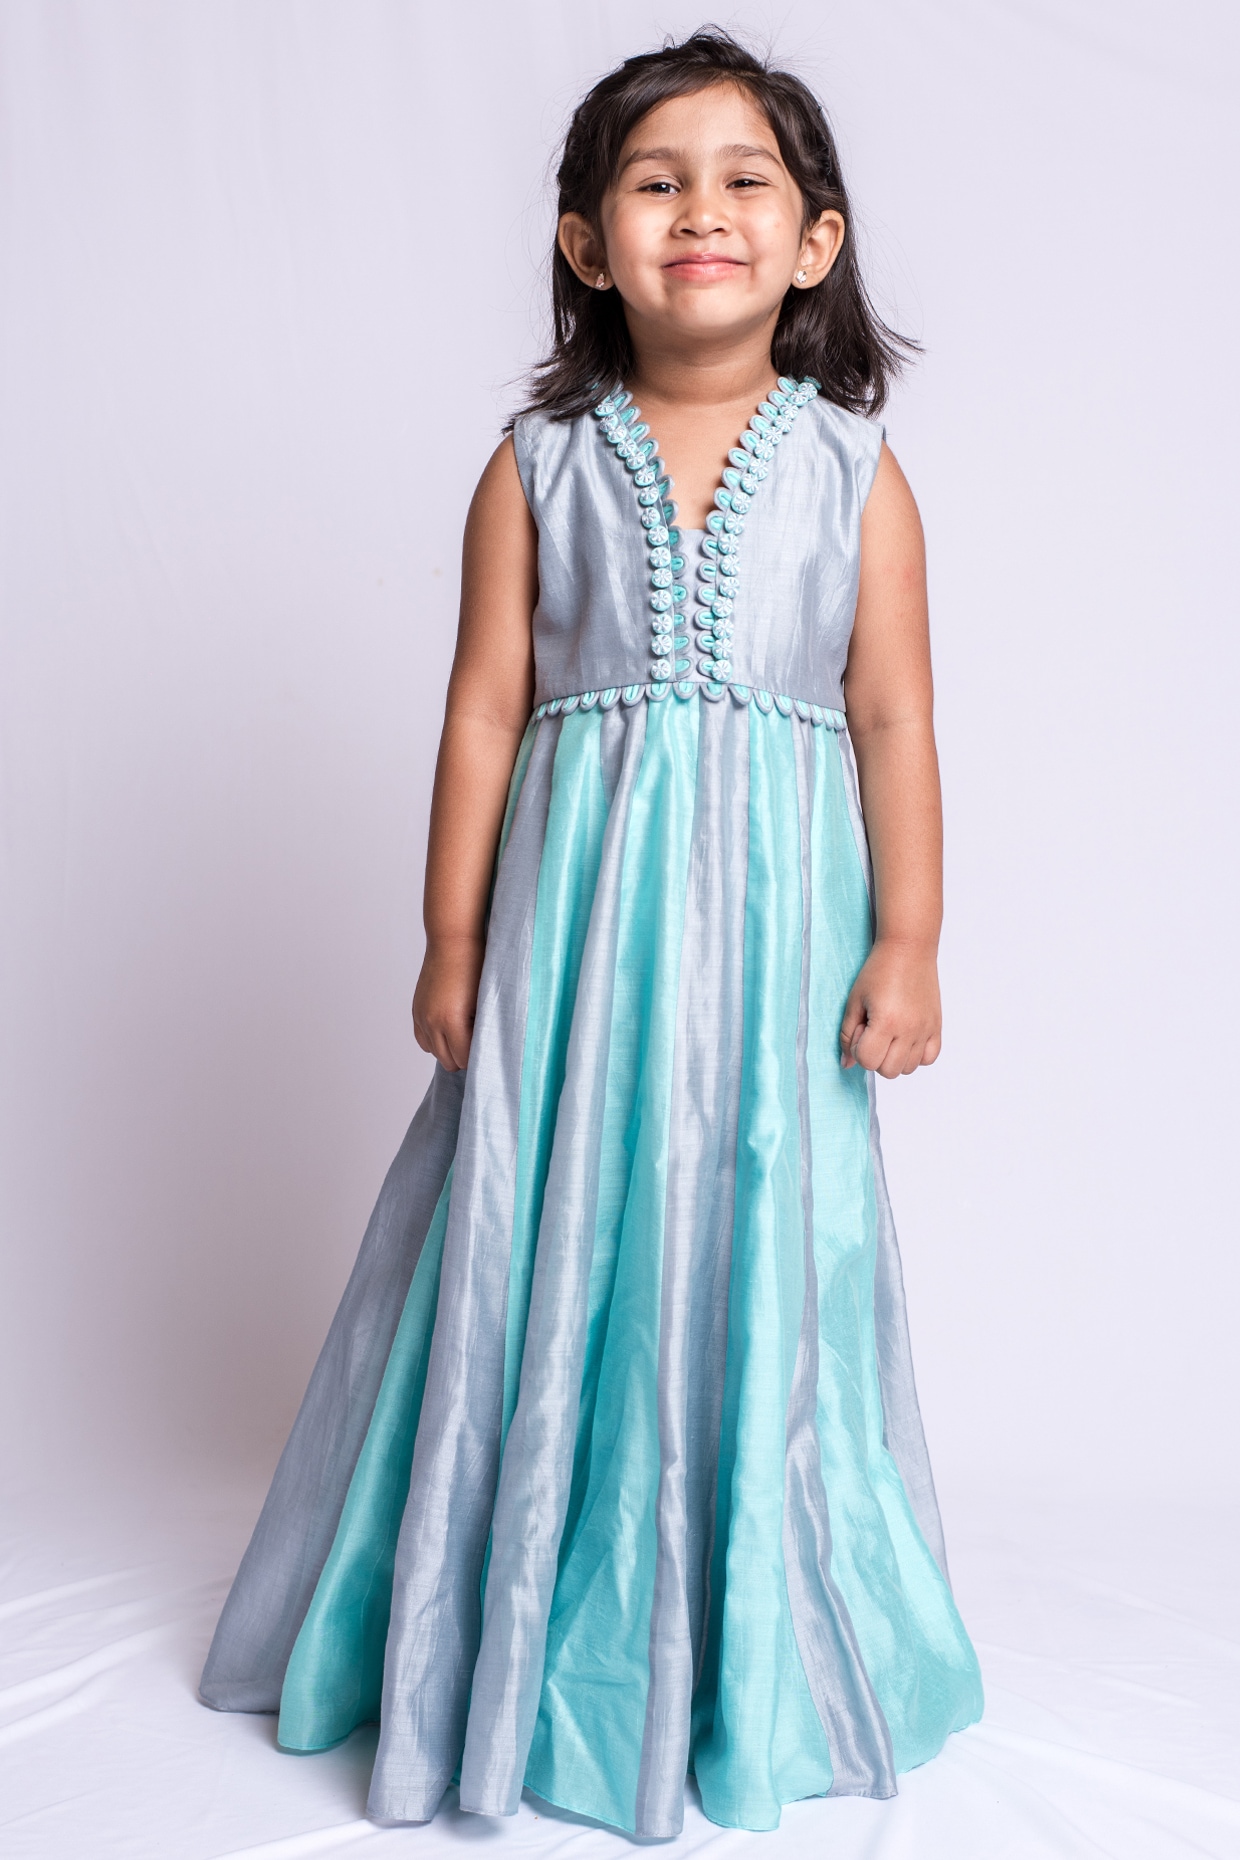 Mint Anarkali Dress for Girls - A.T.U.N. | Kids Clothing Brand